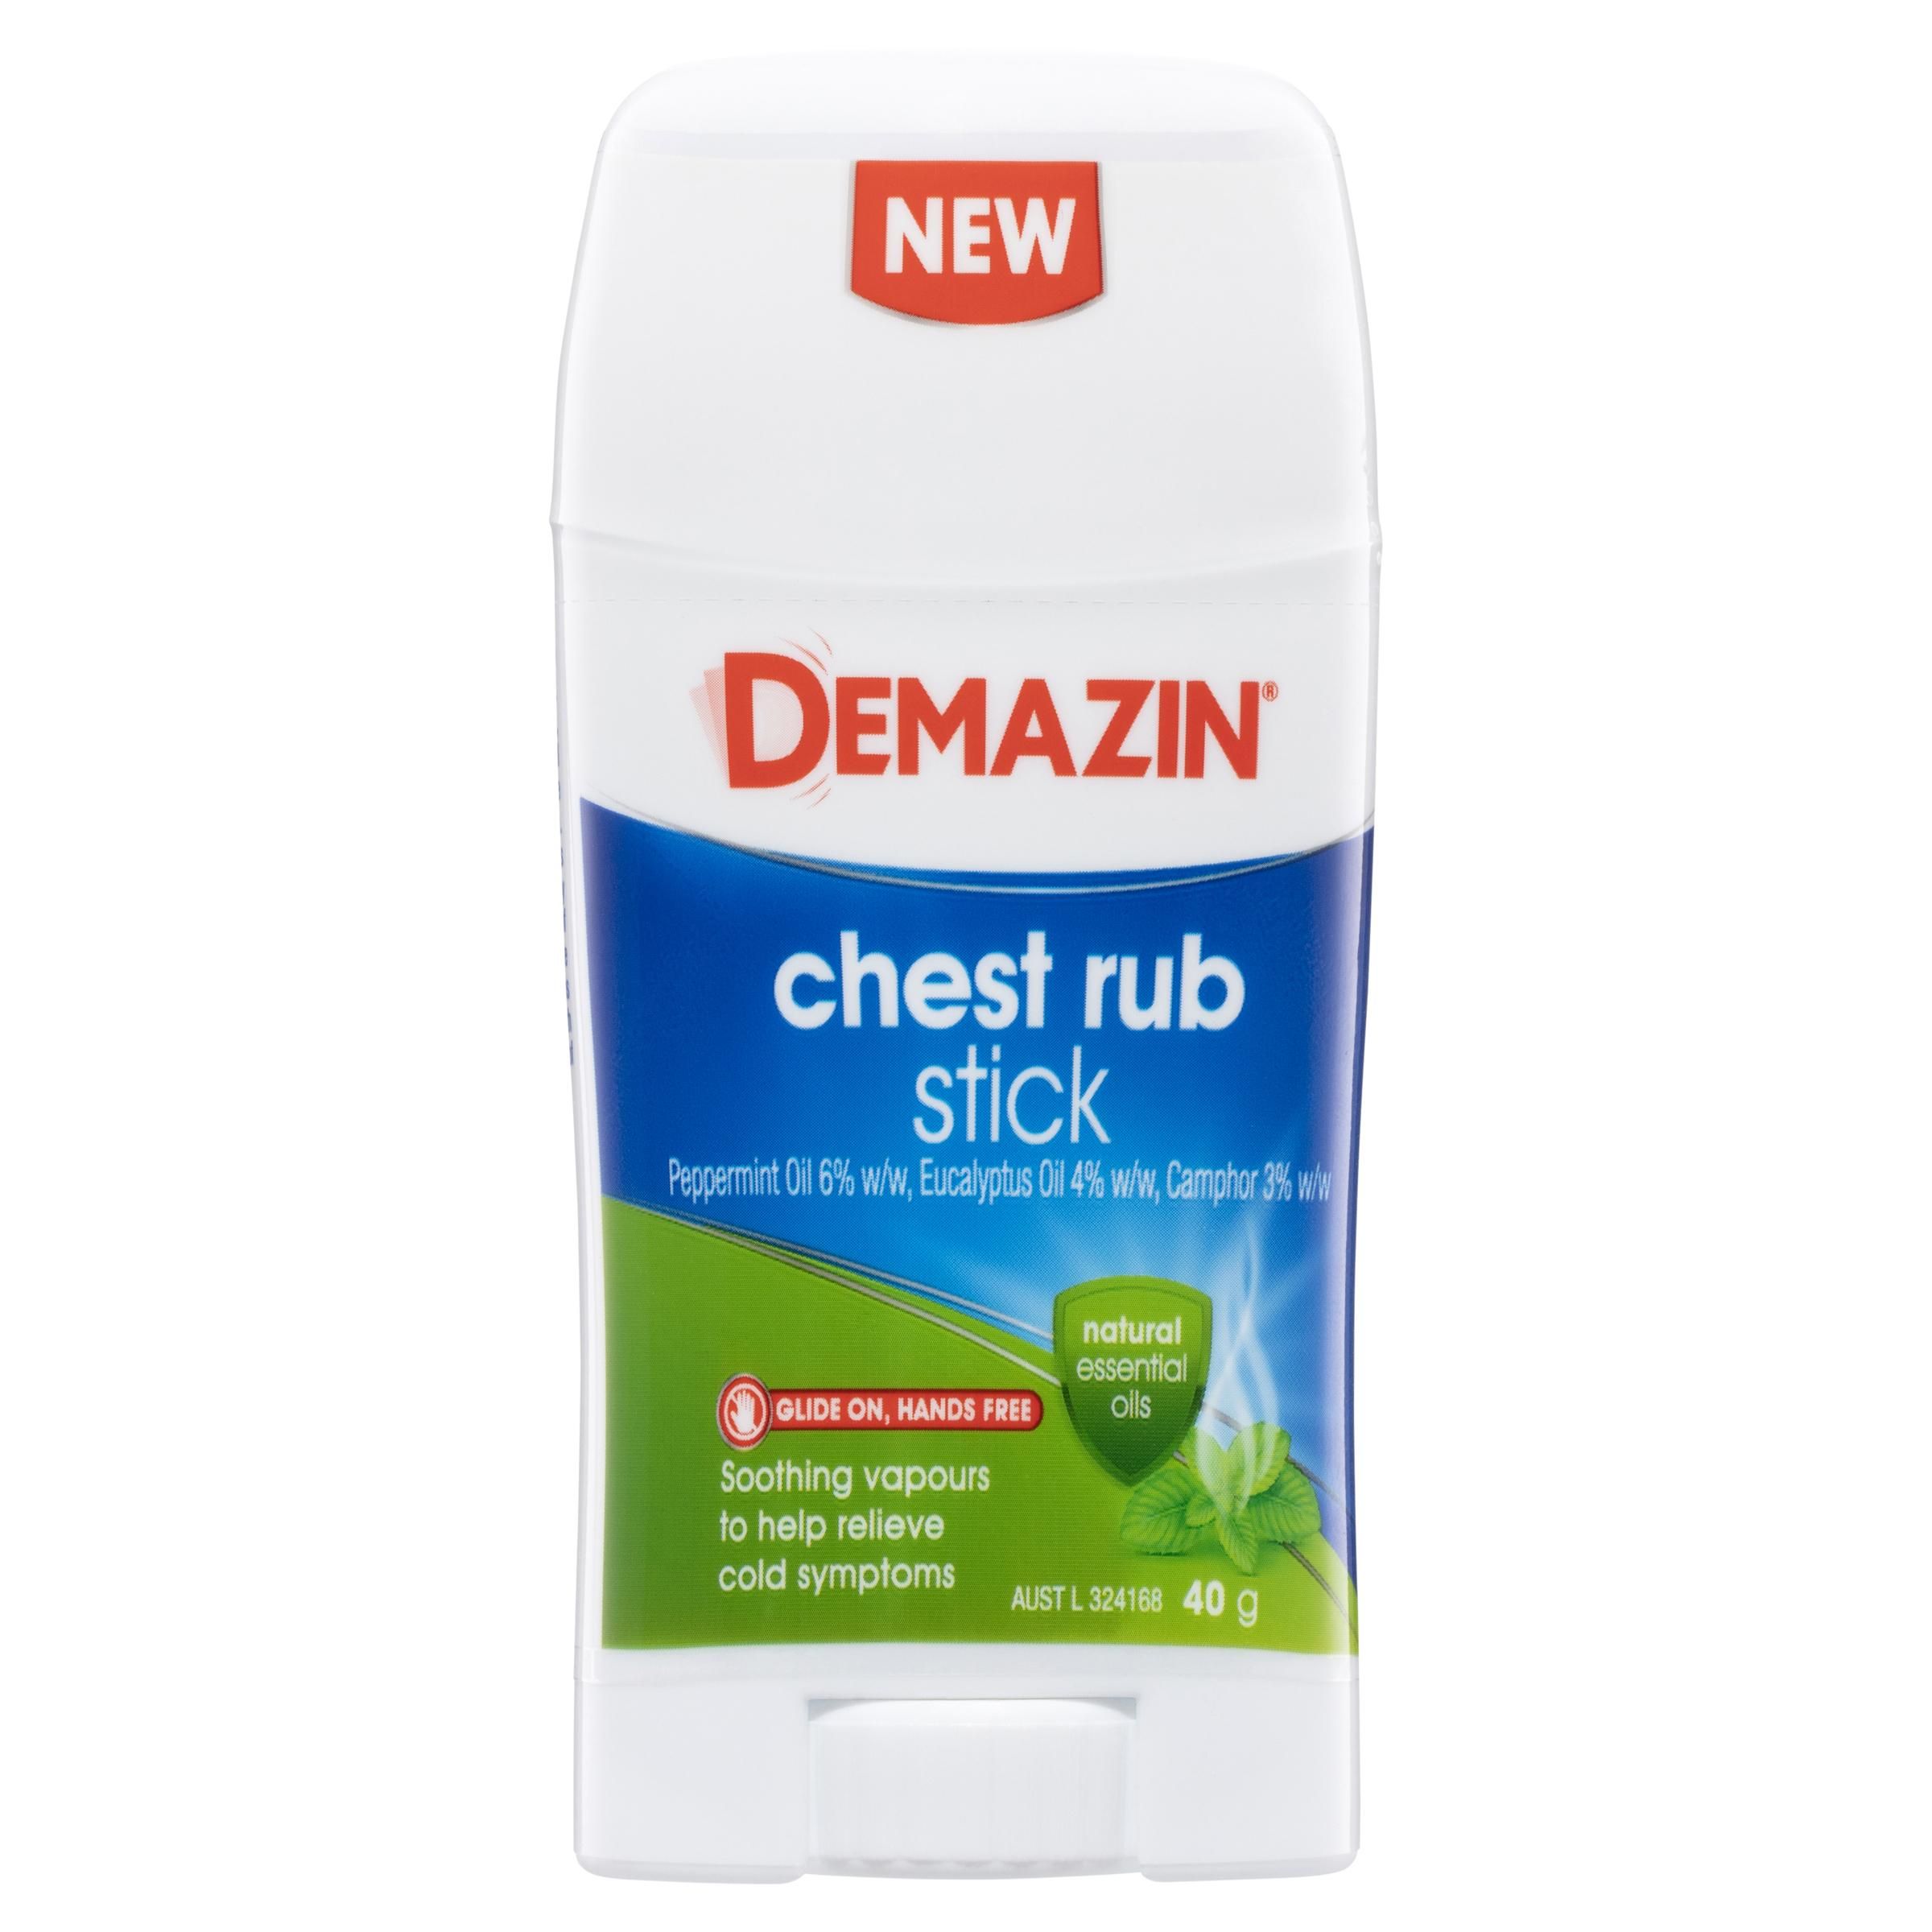 Demazin Chest Rub Stick - Demazin